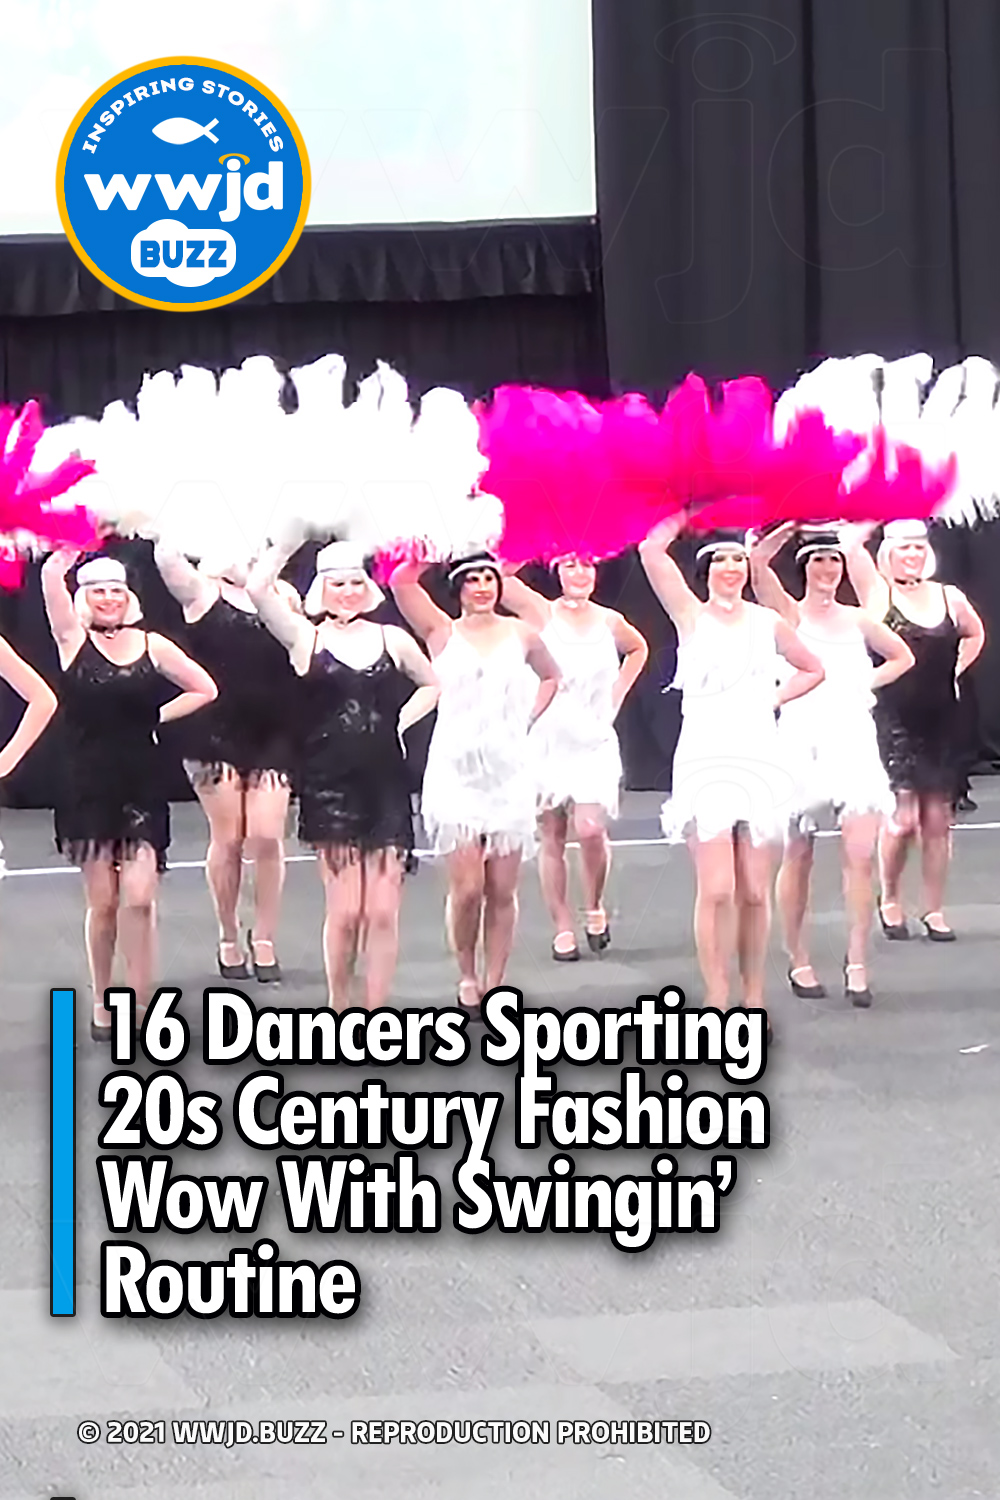 16 Dancers Sporting 20s Century Fashion Wow With Swingin’ Routine